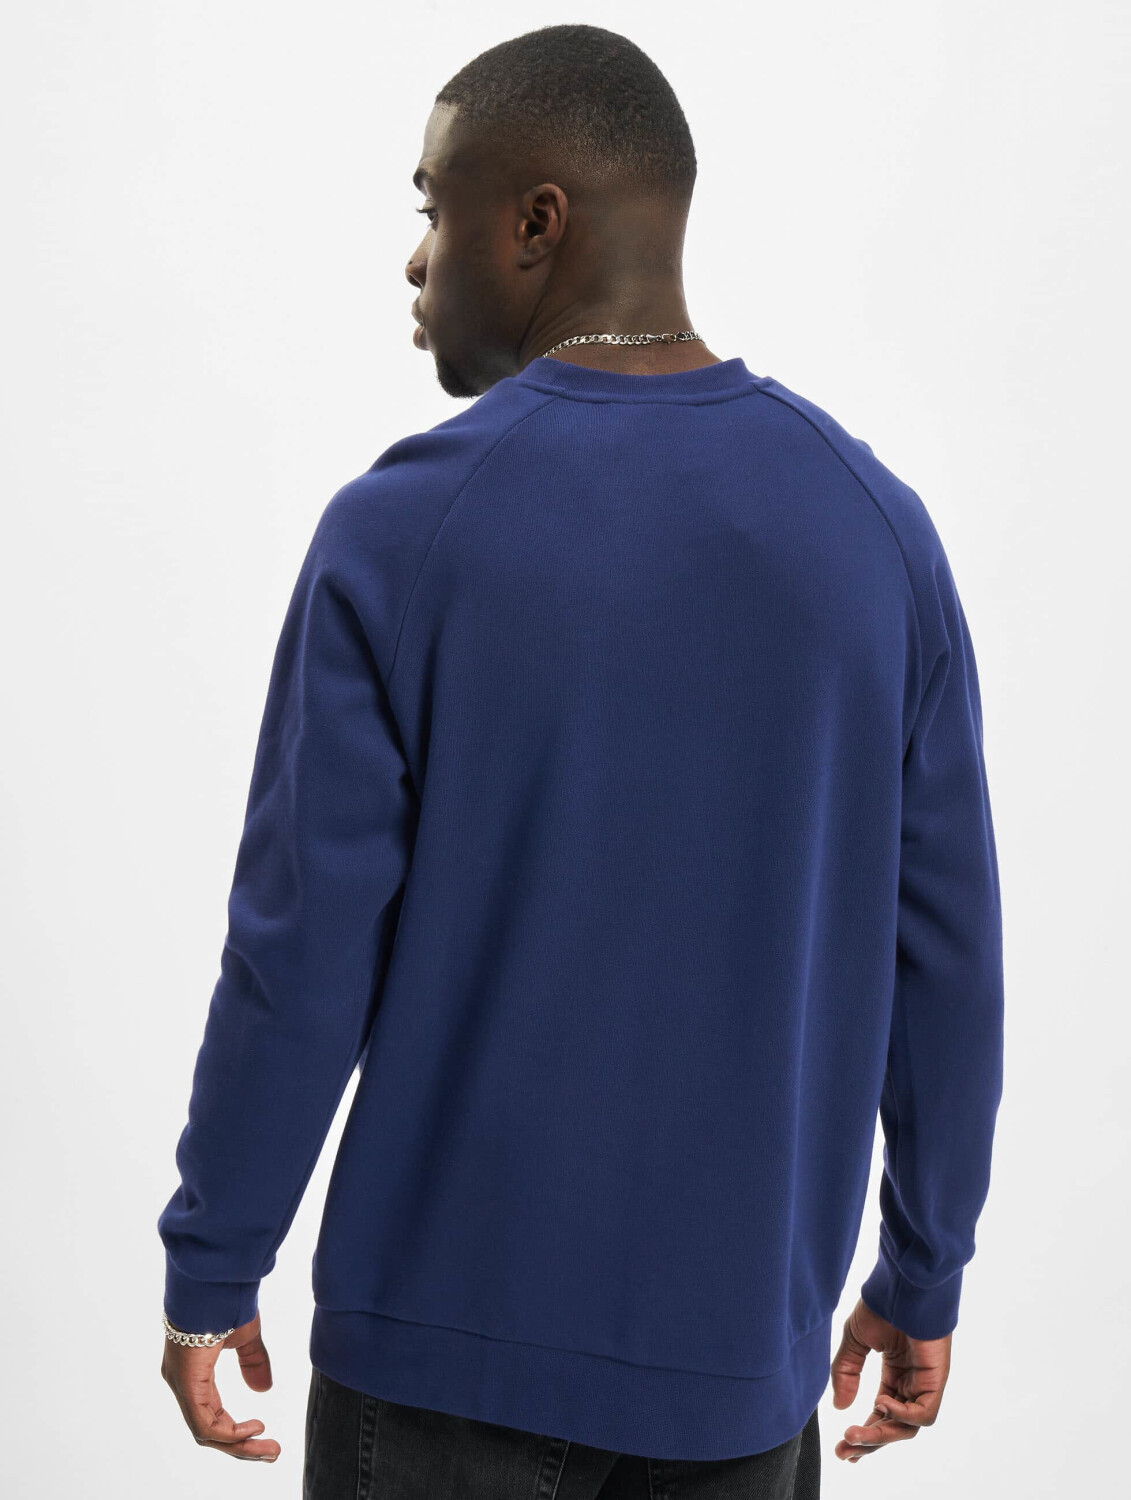 Buy Adidas adicolor (Today) £22.99 from dark Trefoil Sweatshirt Classics (H06654) on Deals – Best blue